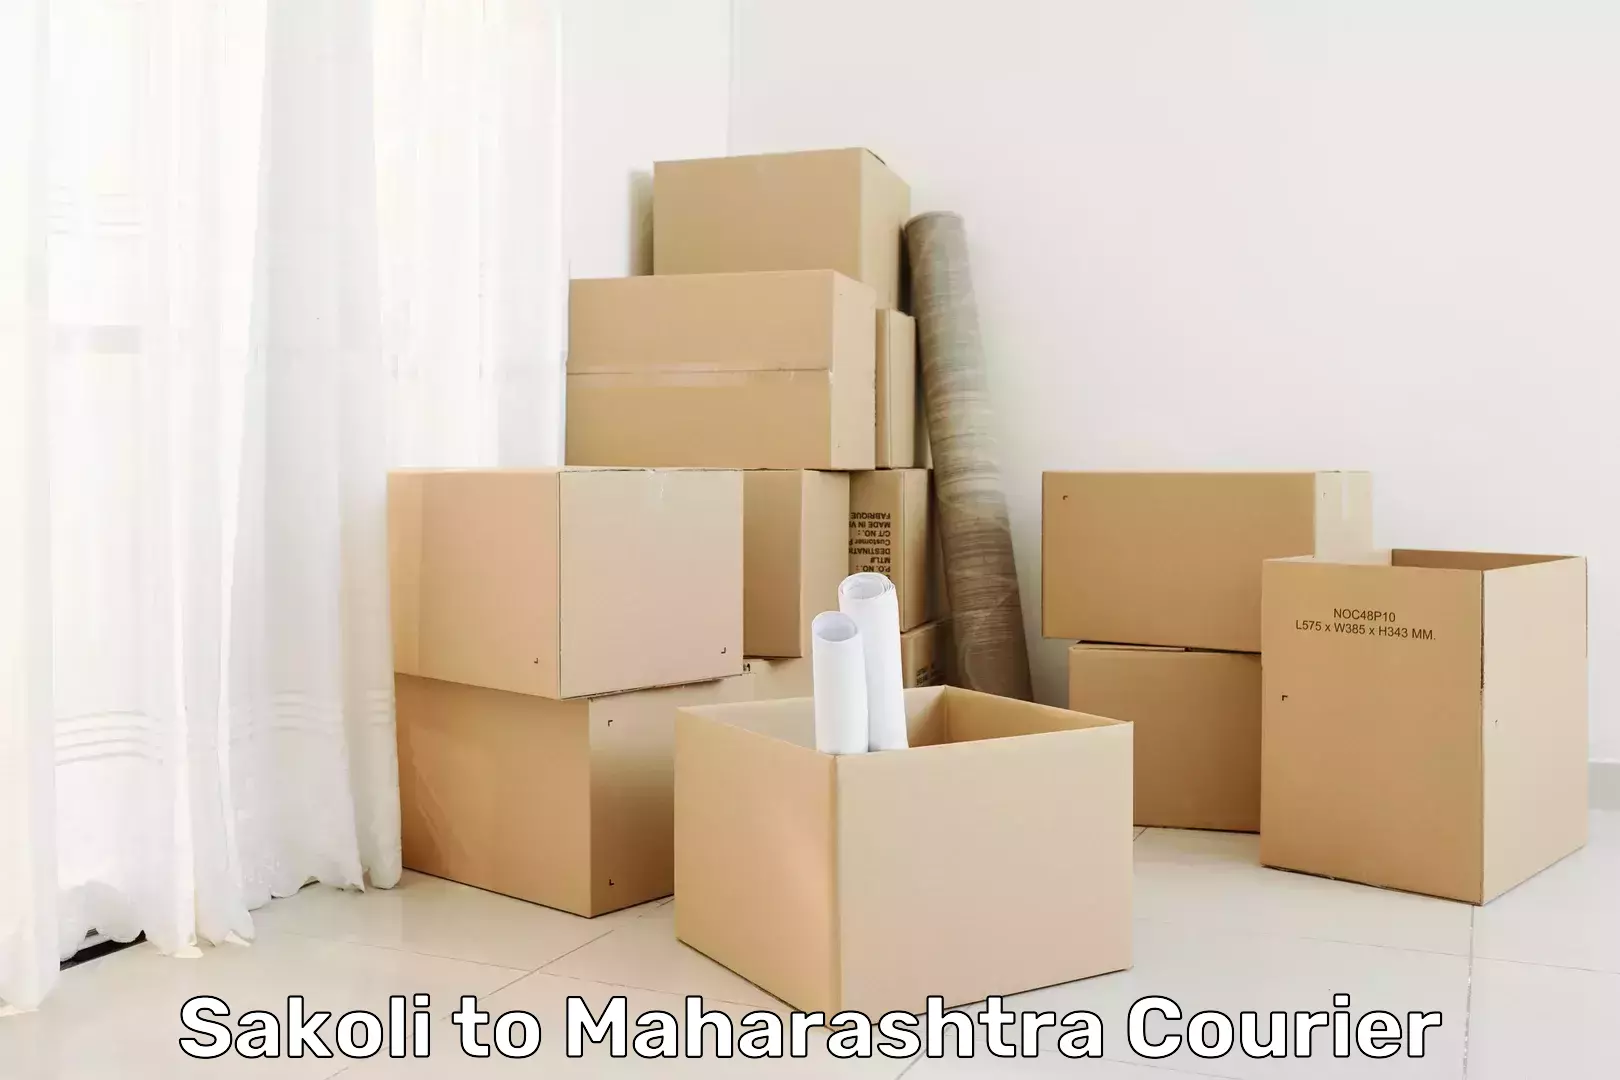 Courier service comparison Sakoli to Mumbai Port